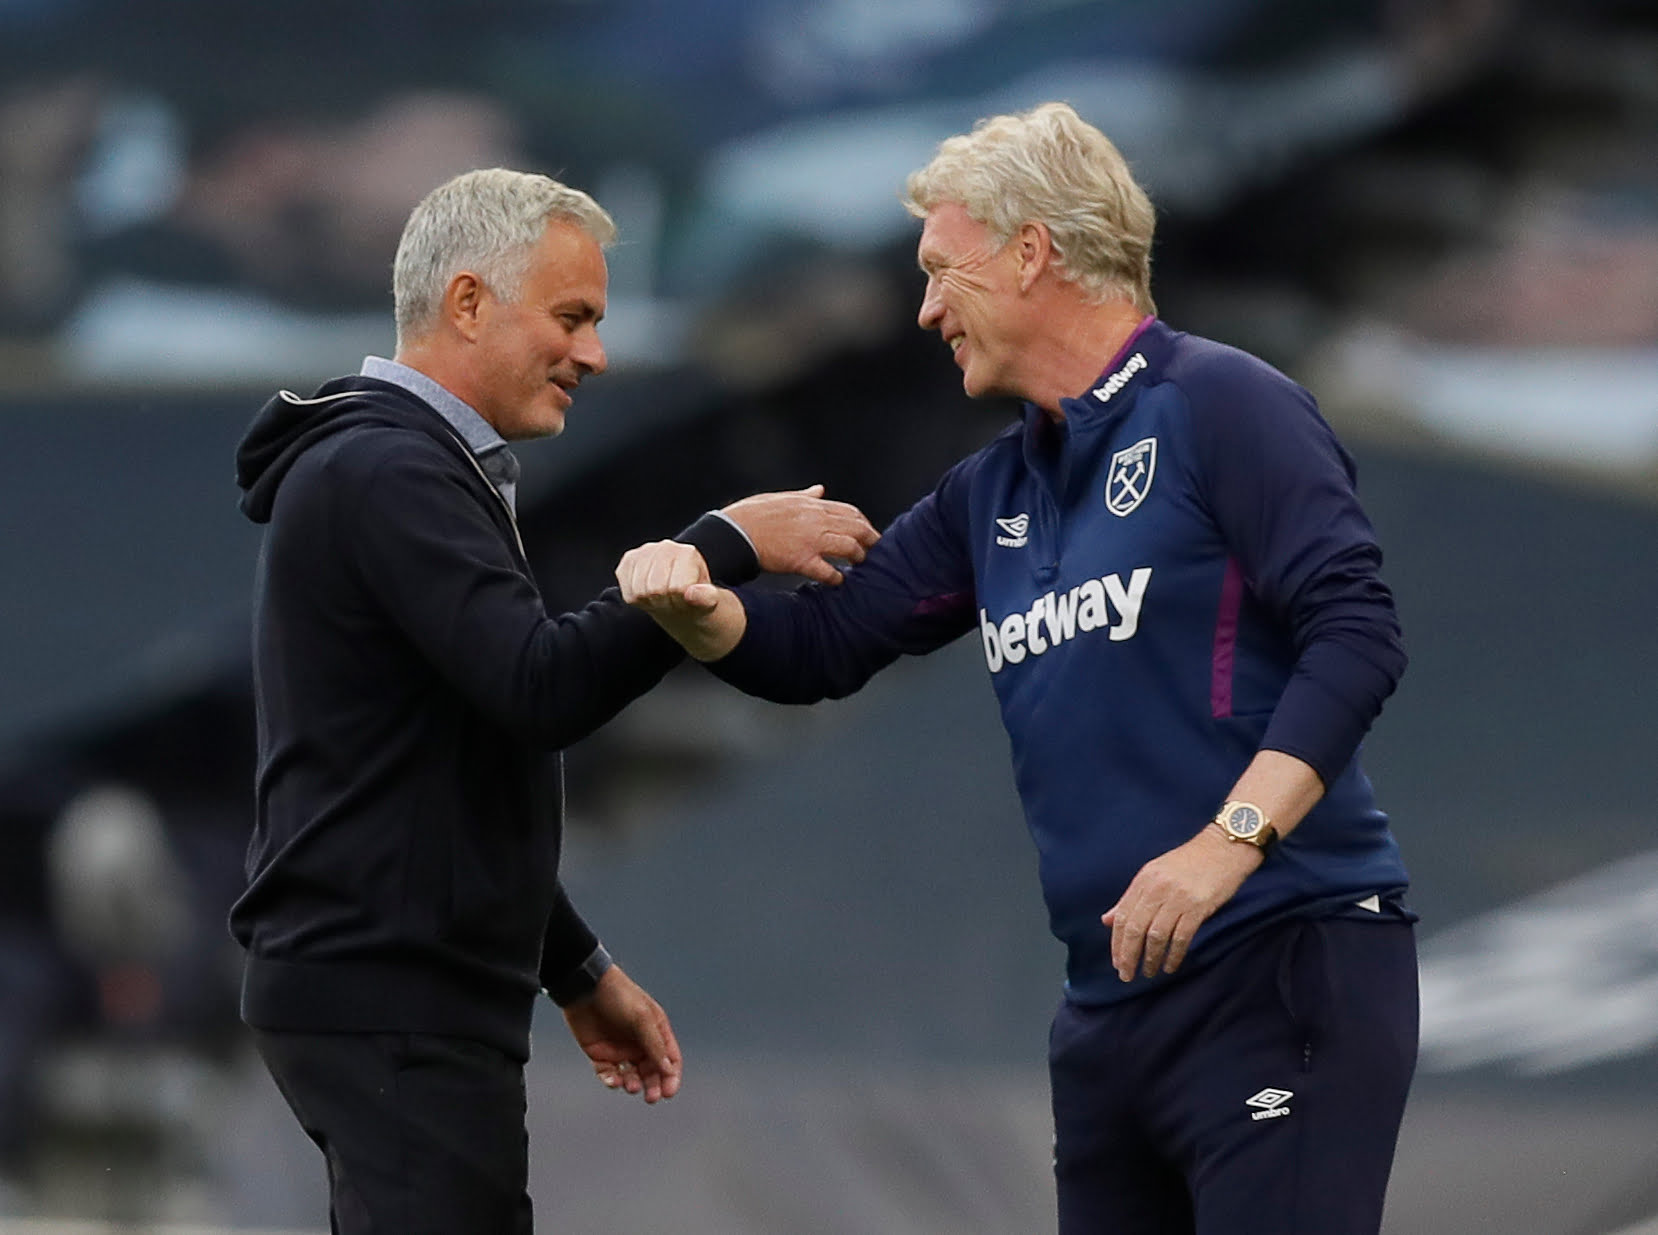 West Ham Vs Tottenham Hotspur Preview - Battle of two ex-Man United coaches.